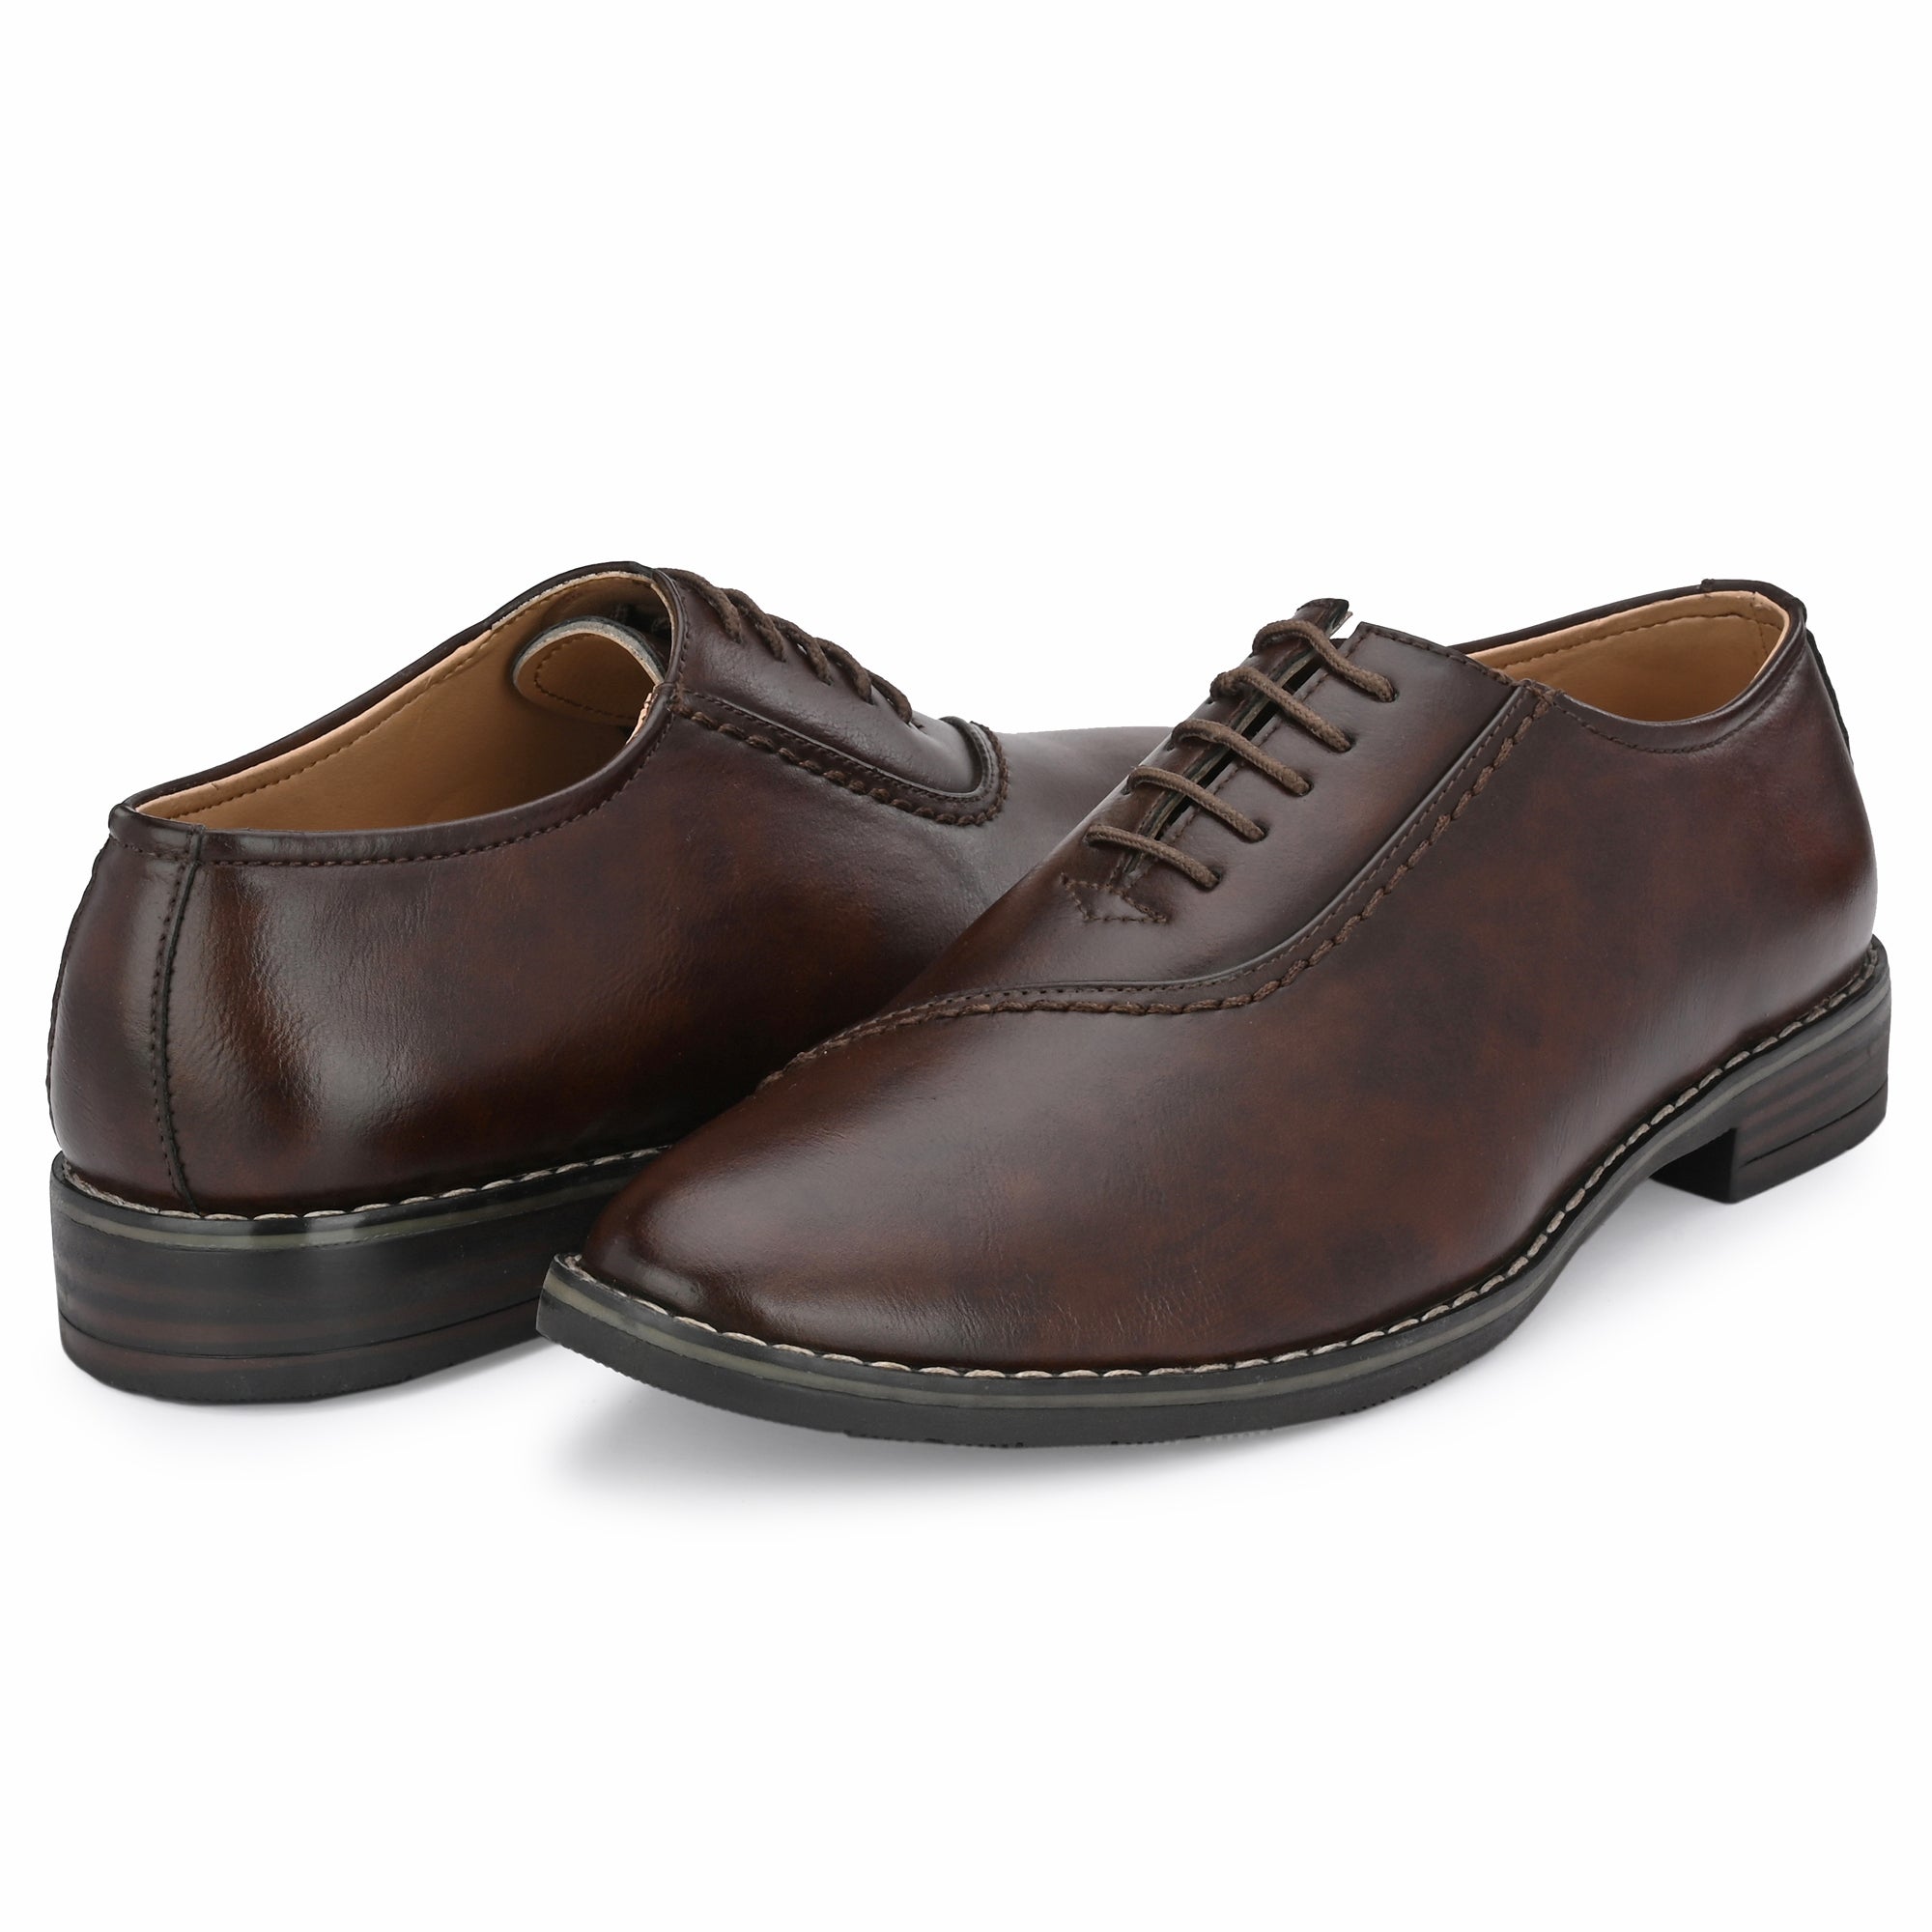 brown-formal-lace-up-attitudist-shoes-for-men-with-design-sp5b